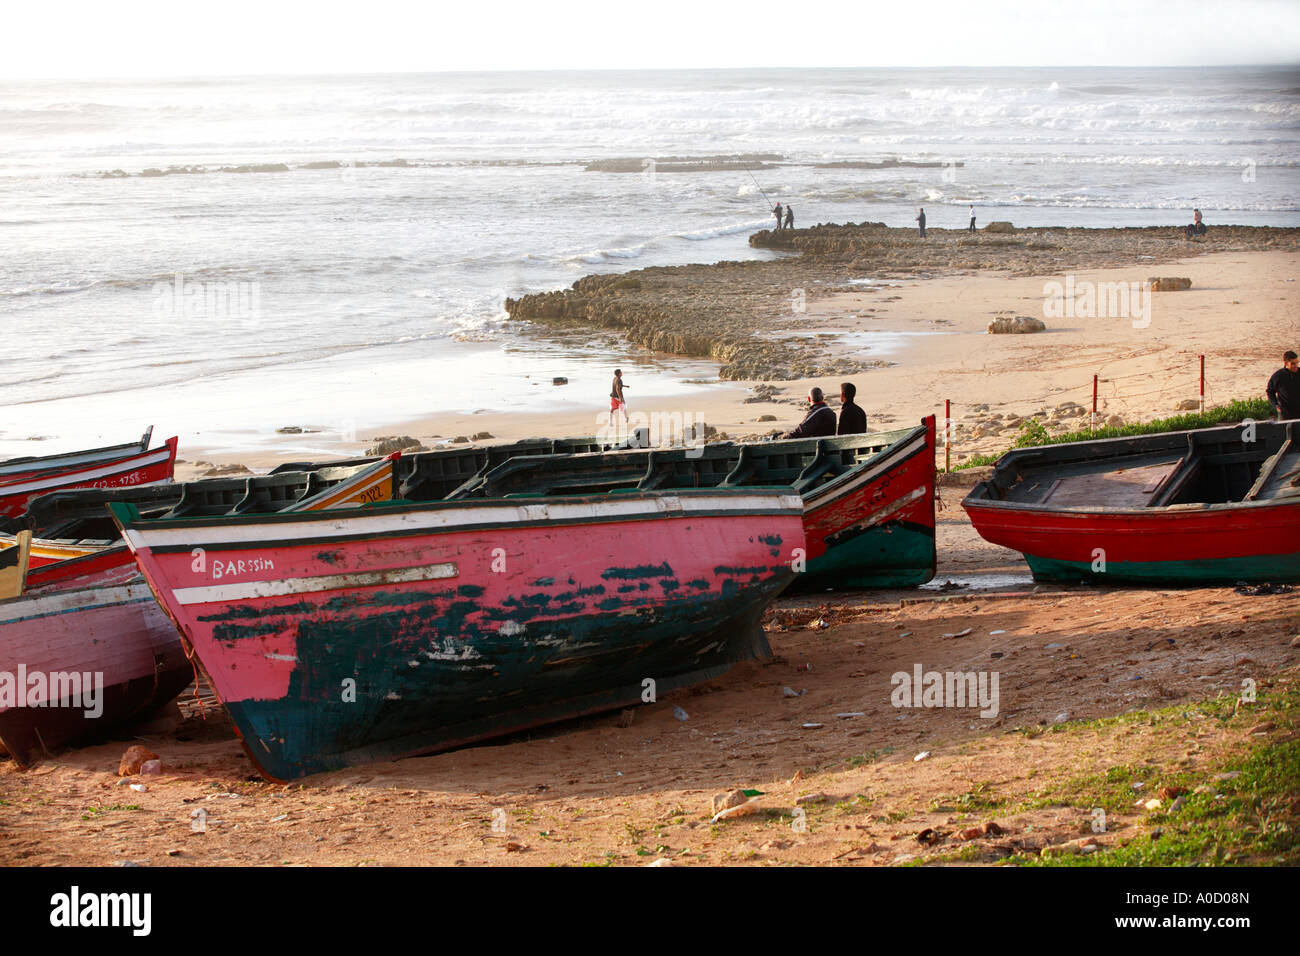 Bateaux à côté de l'océan Atlantique, à proximité de Sidi Bouzid à El Jadida au Maroc Banque D'Images